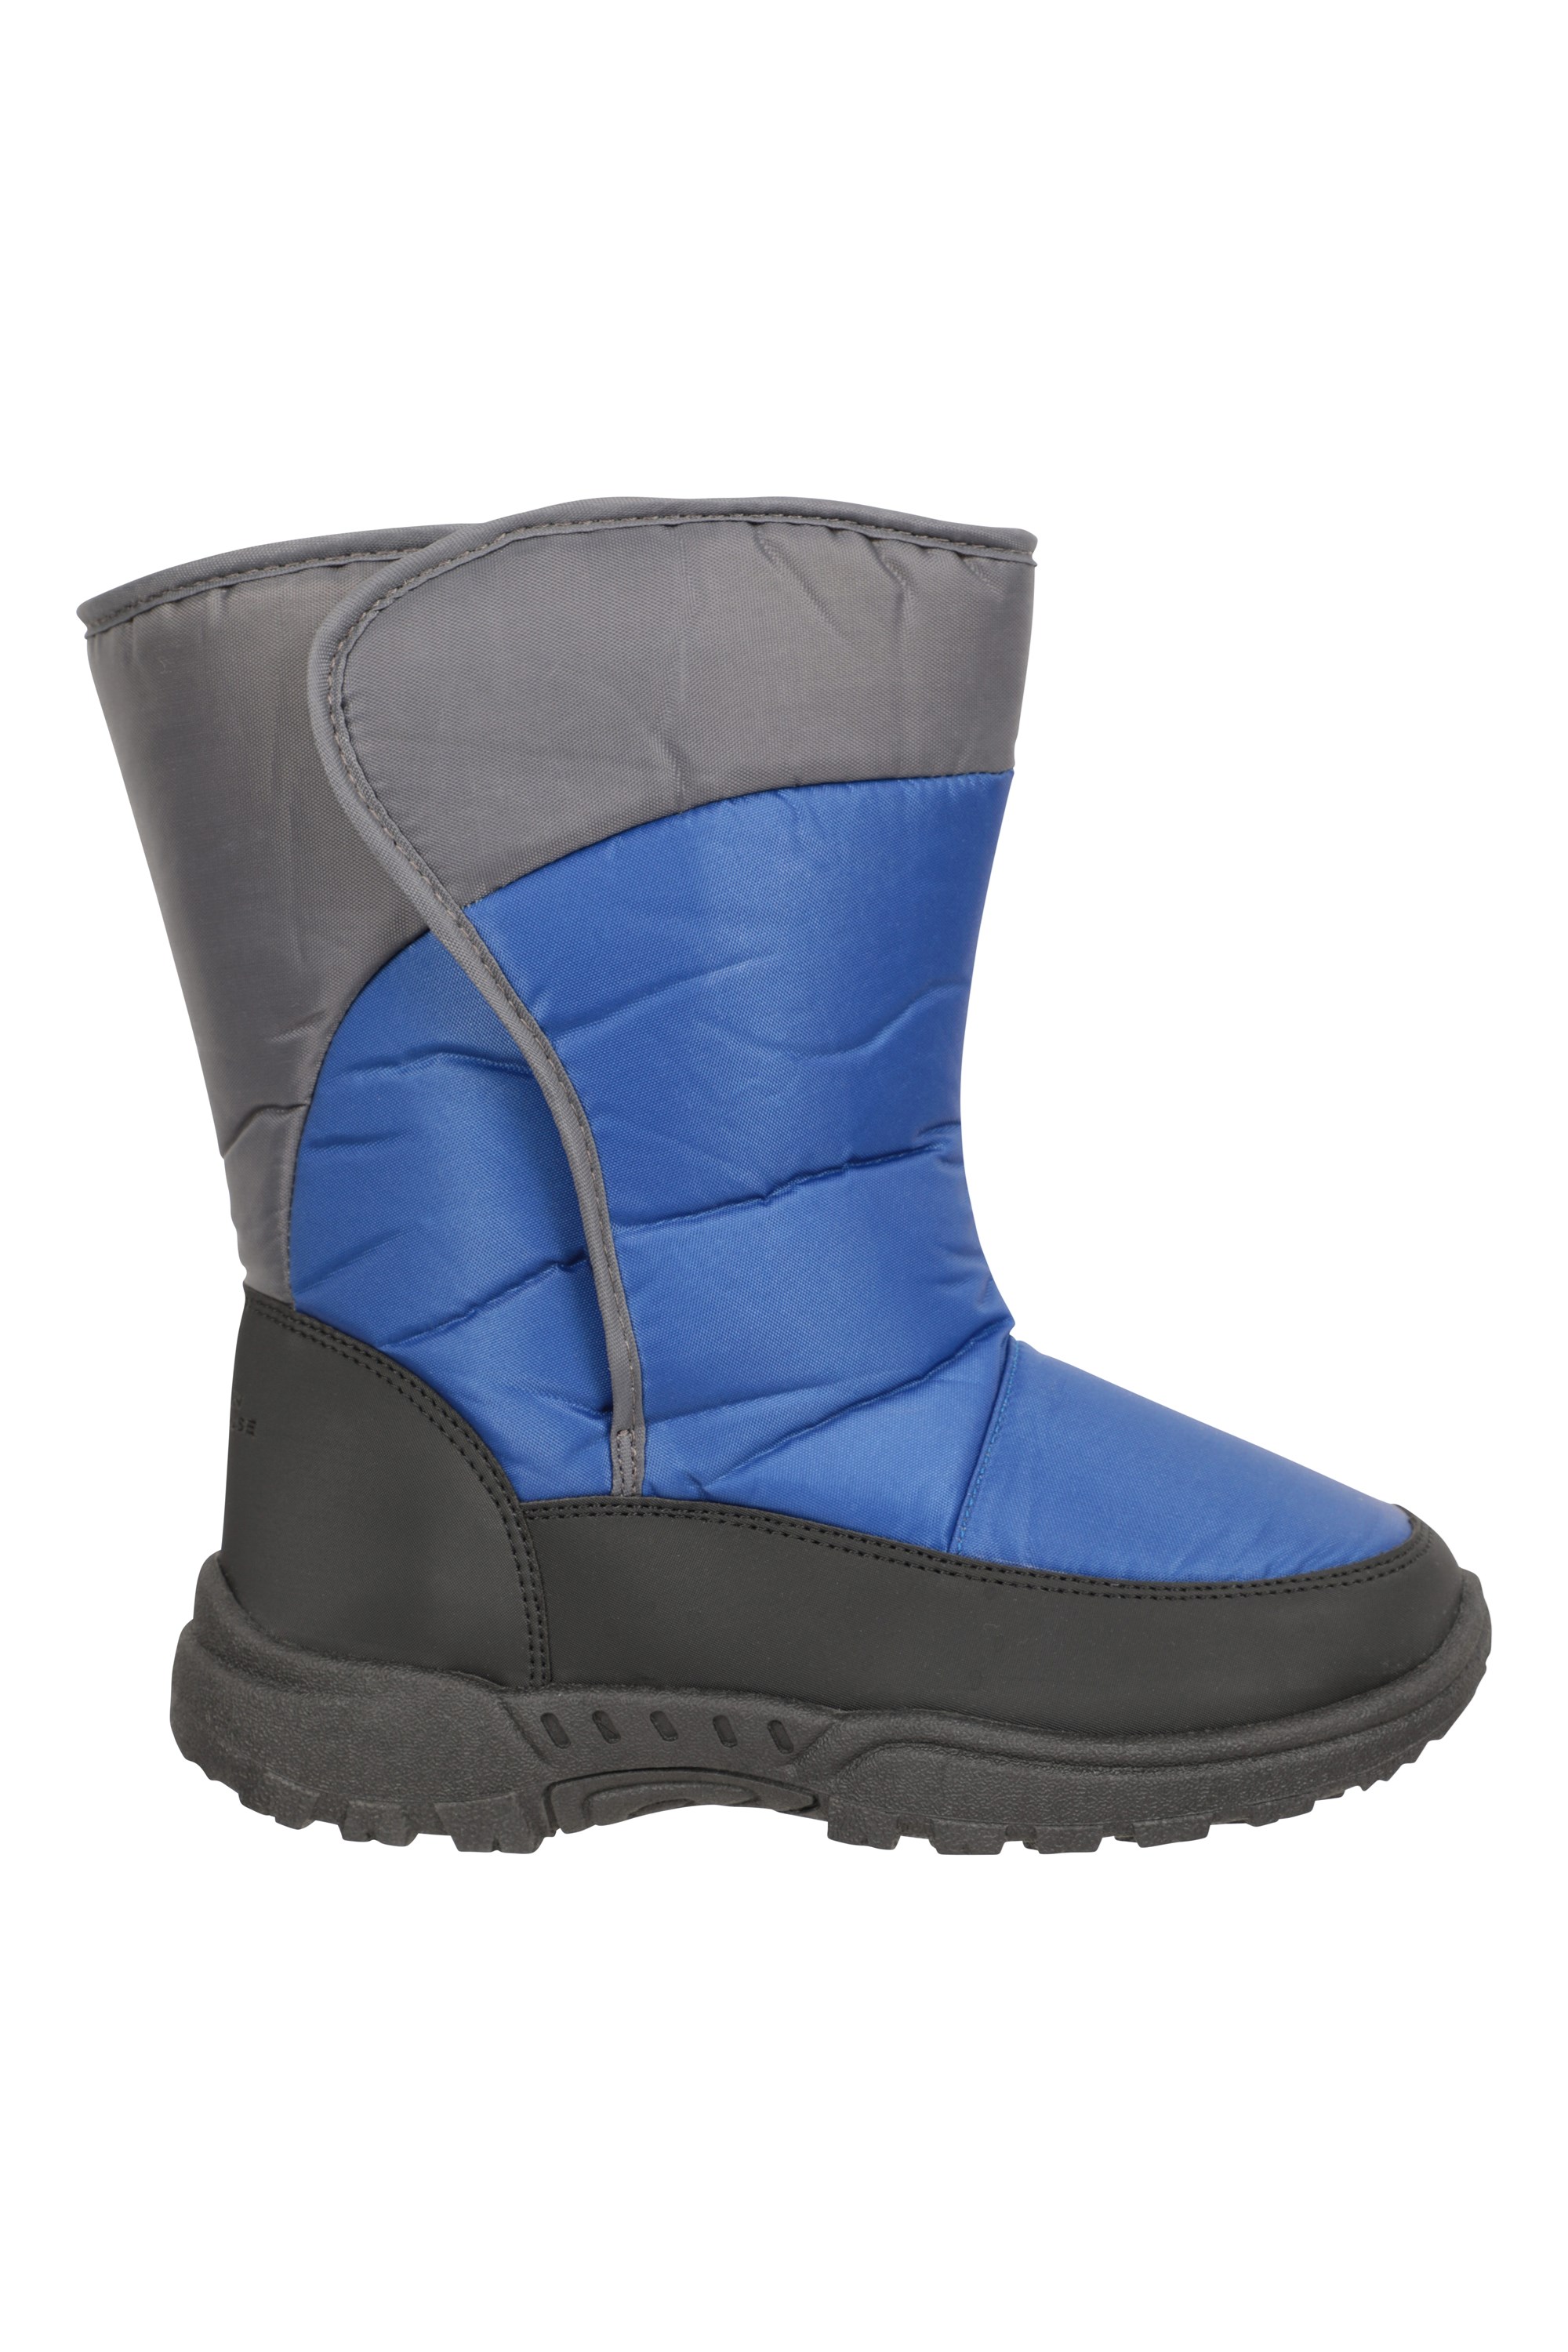 Kids Caribou Single Stripe Adaptive Snow Boots - Blue